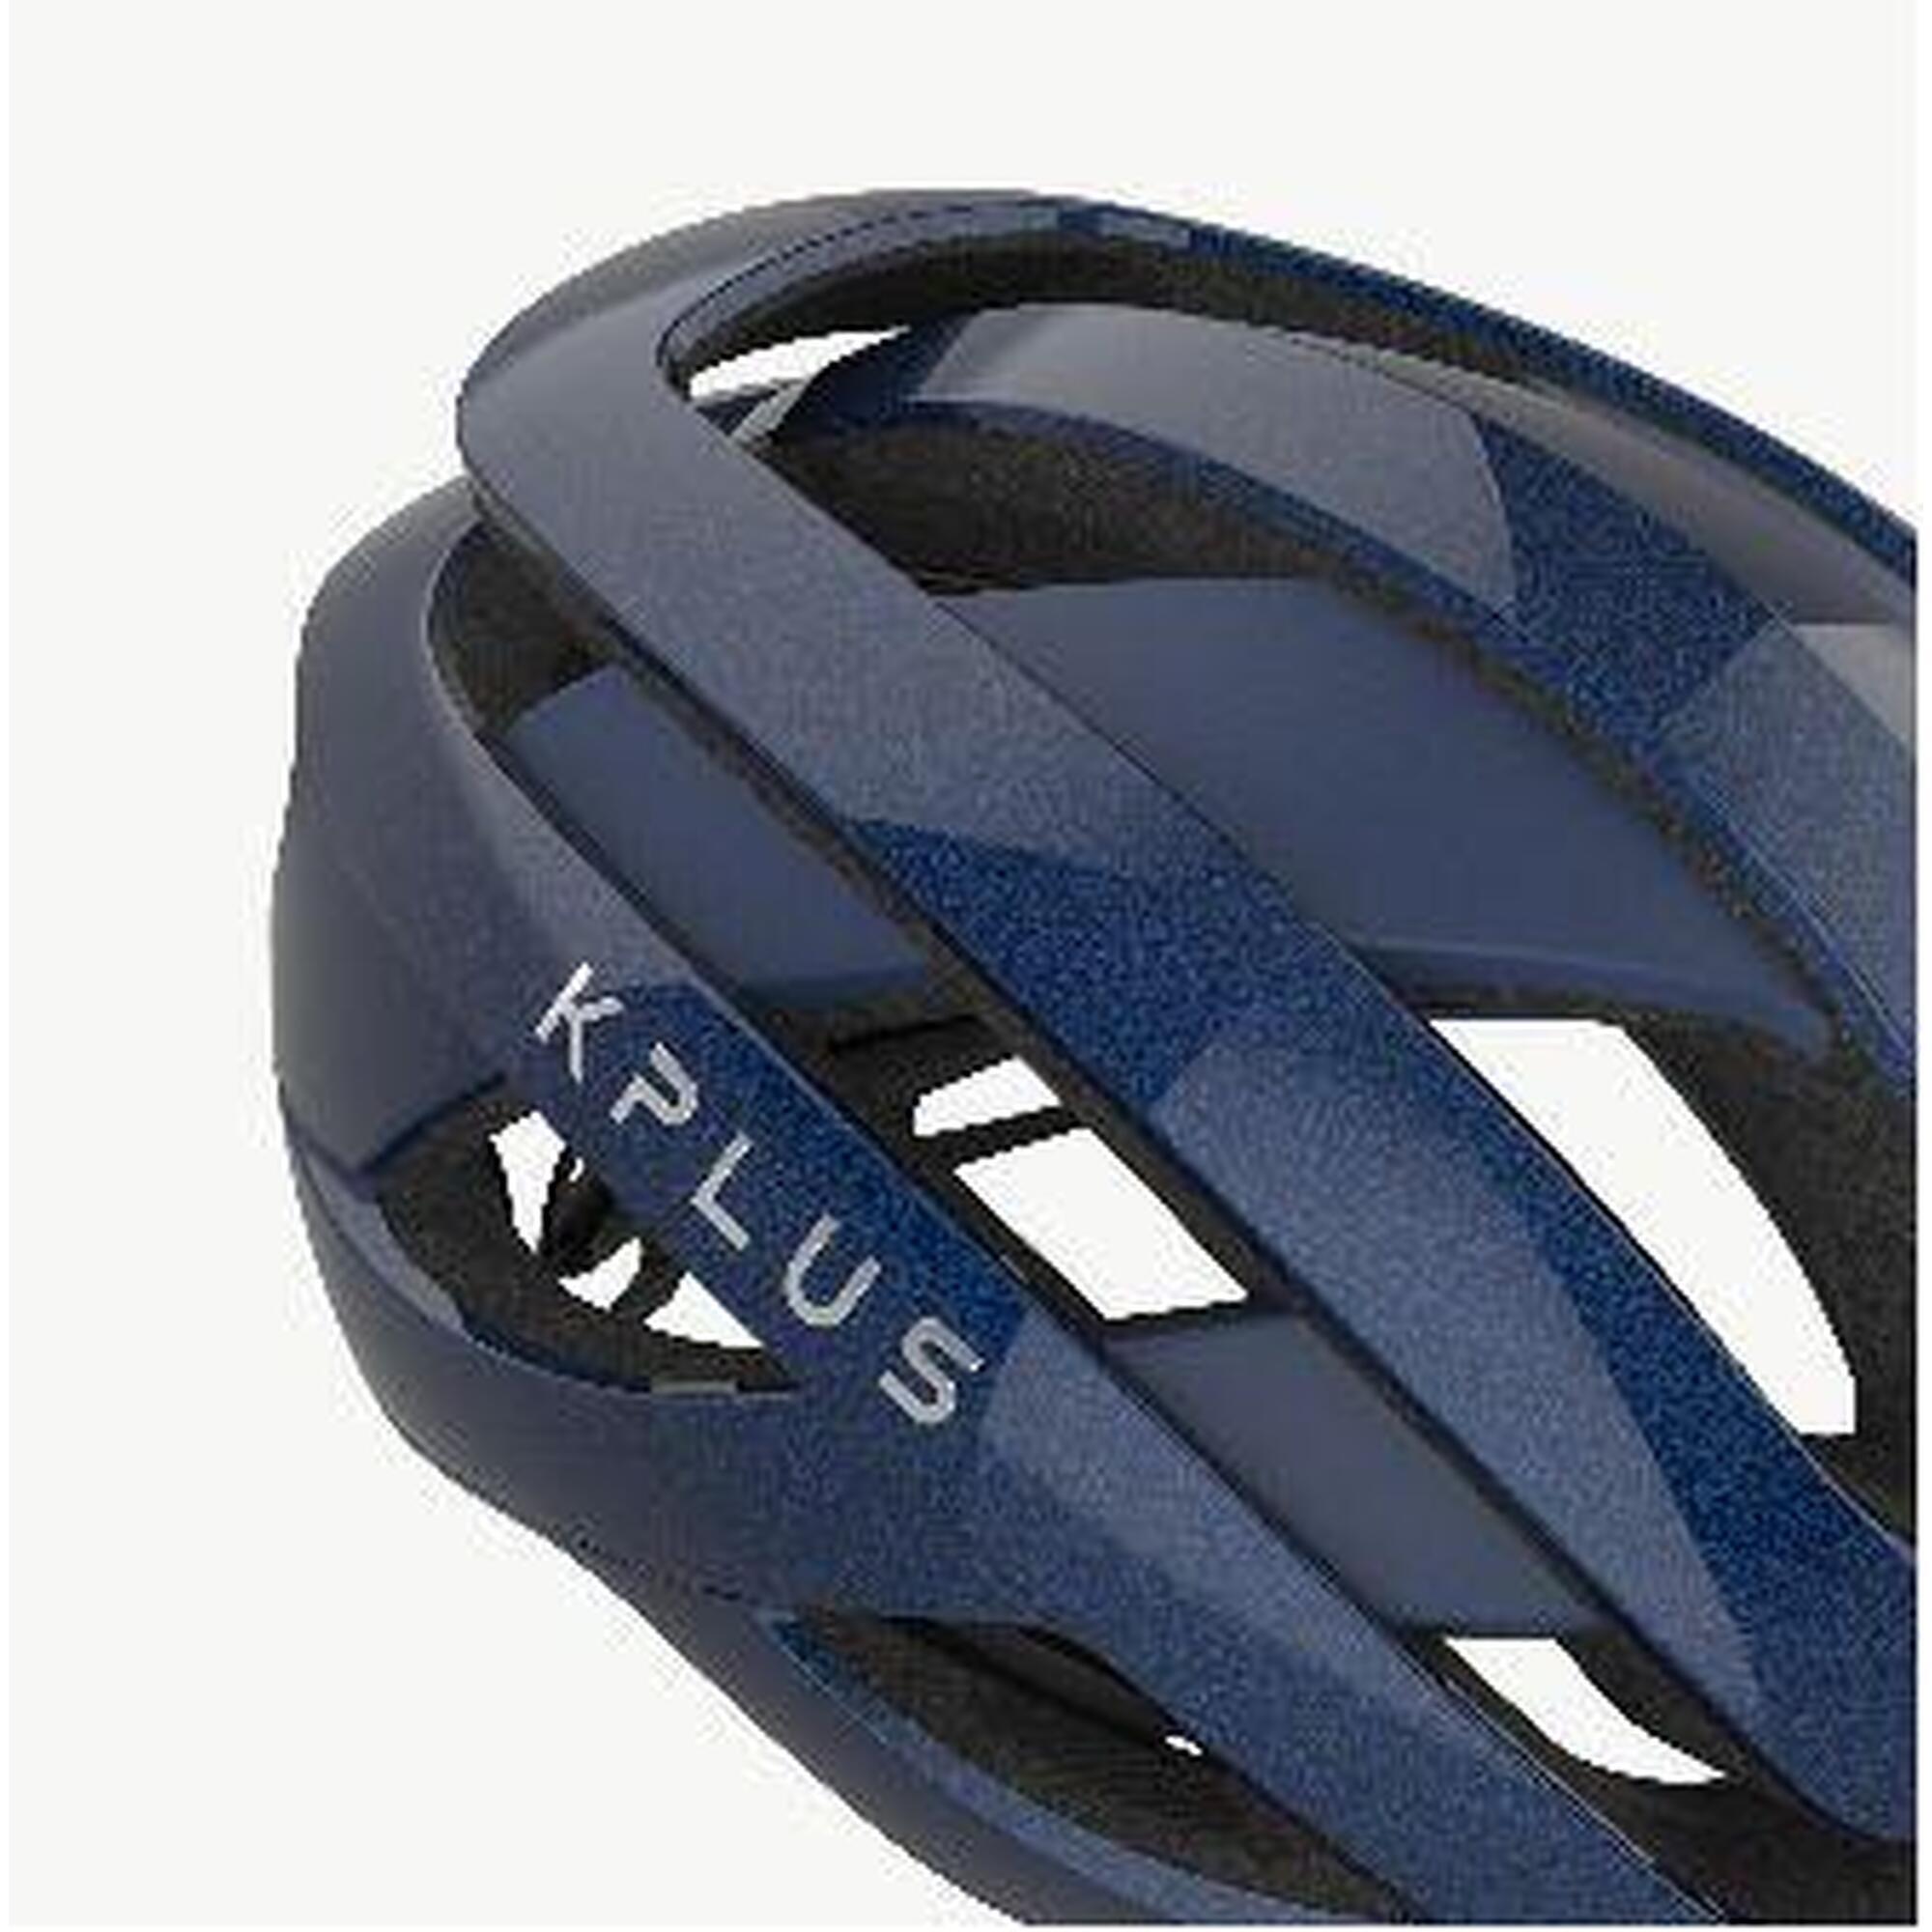 ALPHA MIPS 成人公路單車頭盔 - 藍色